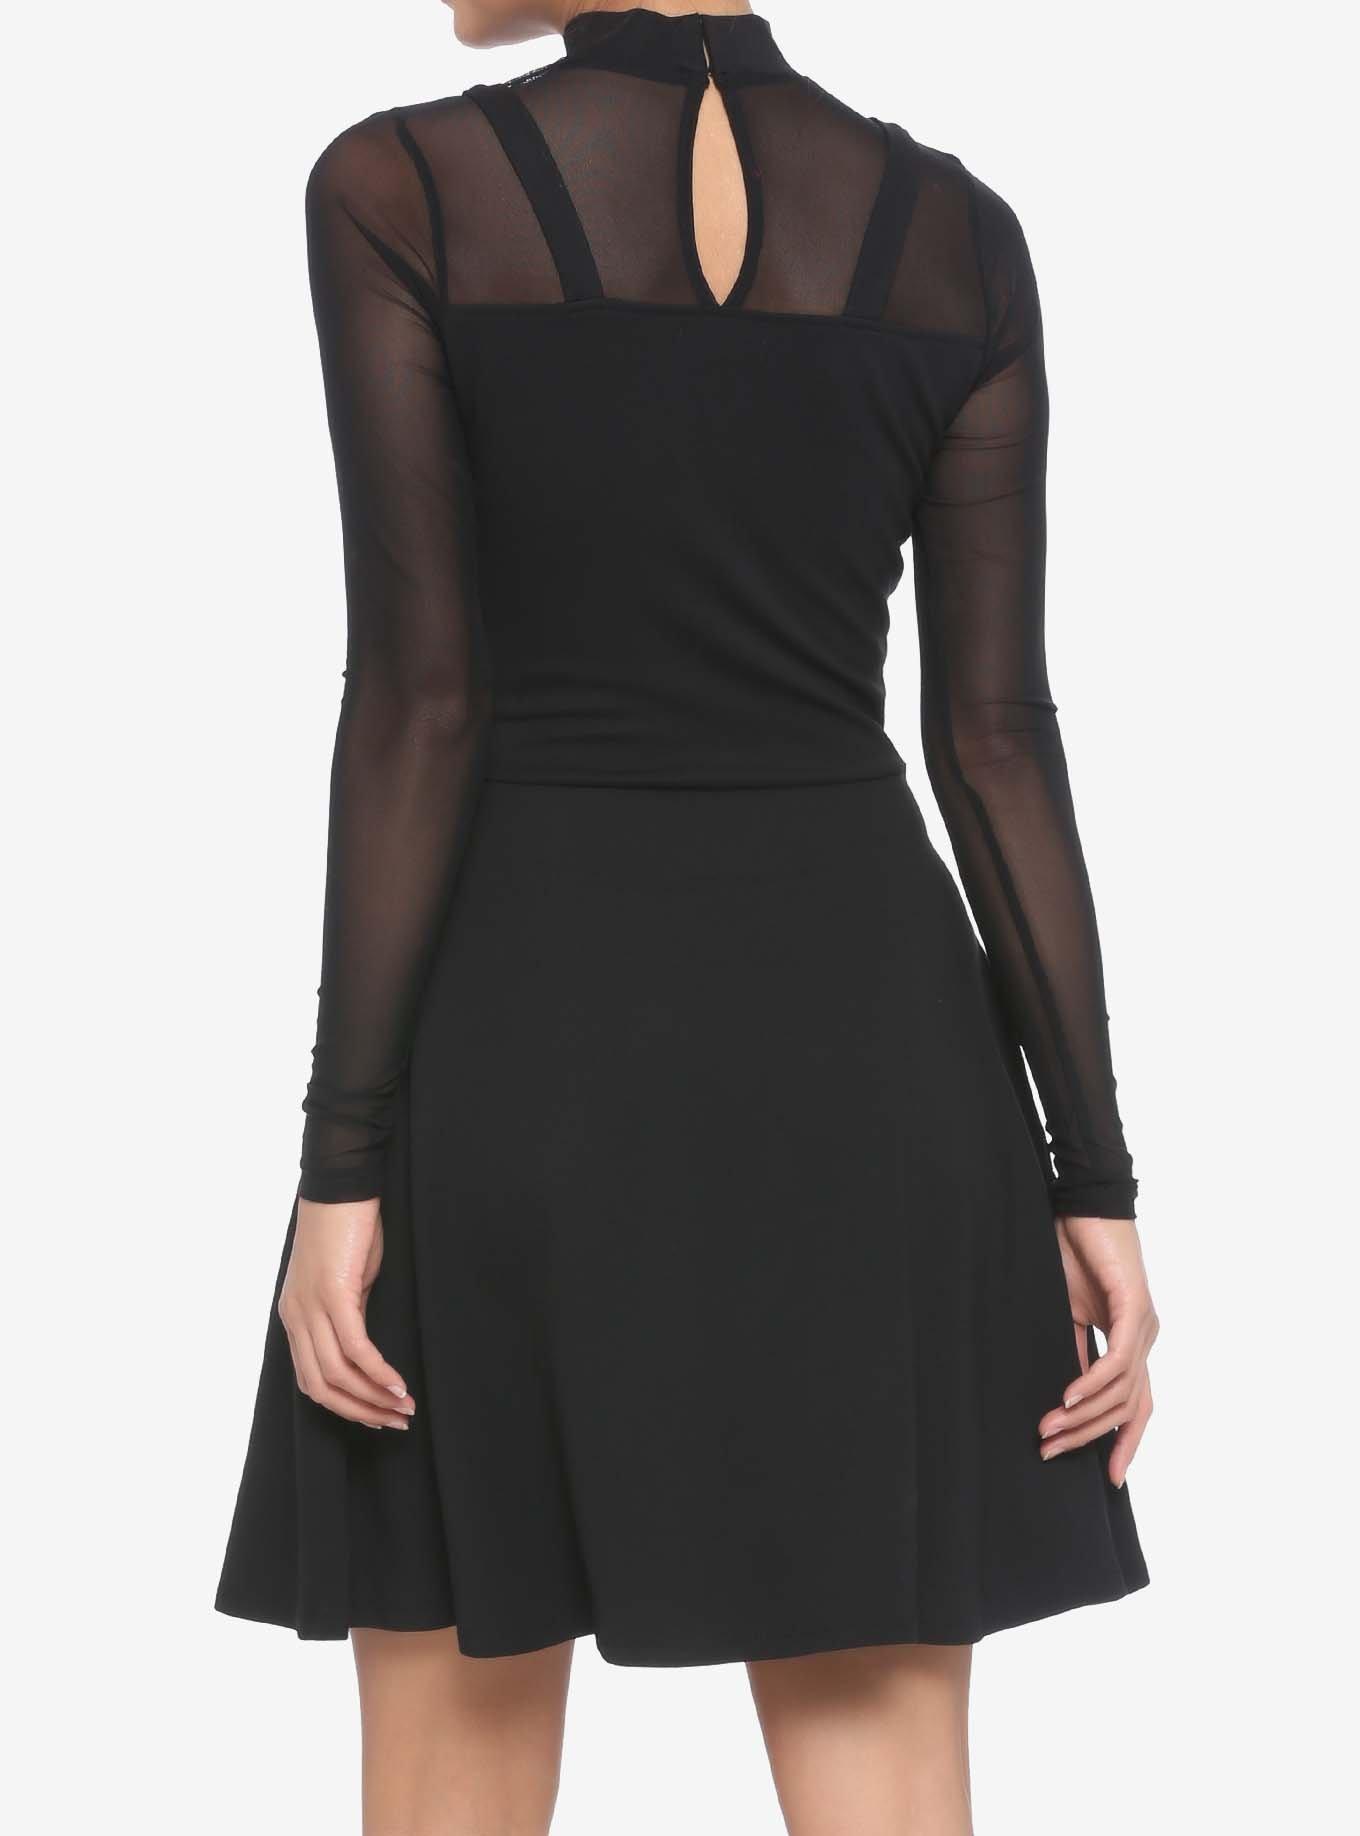 Mesh & Buckle Strap Dress, BLACK, alternate